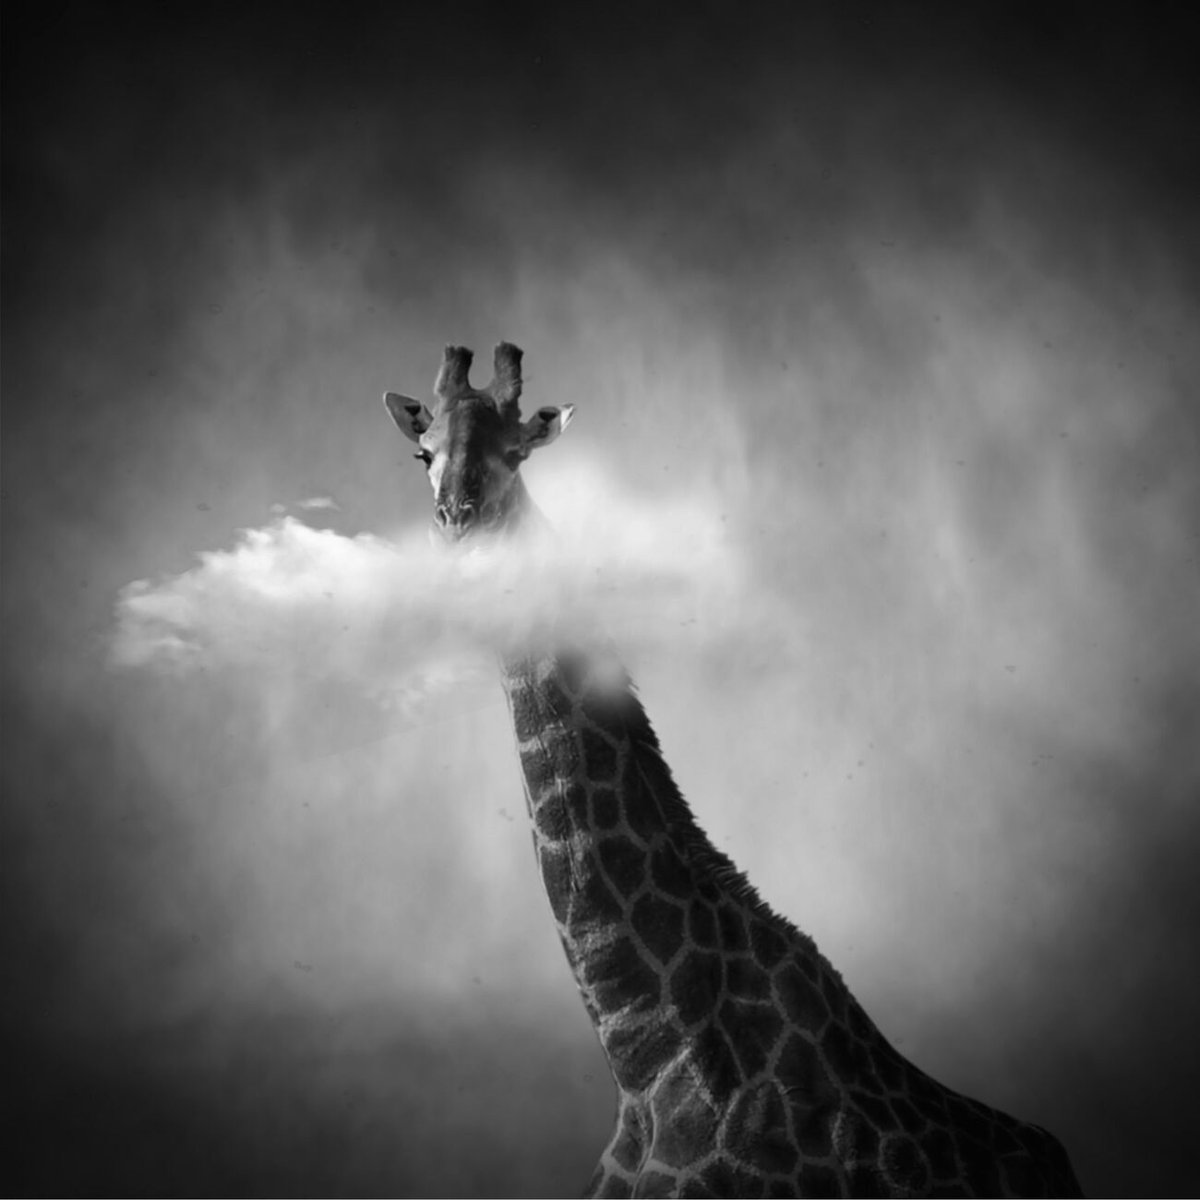 Dreamspace Reloaded, Etude 21. May 2008. Ref-1172: Get prints denisolivier.com/photography/dr…
@stellarequipment #poetic #lost #decorativearts #blackandwhitephoto #bnw #artgallery #imagination #fineartphotography #digitalartist #digitalart #monochrome #surrealism #blackandwhite #giraffe…